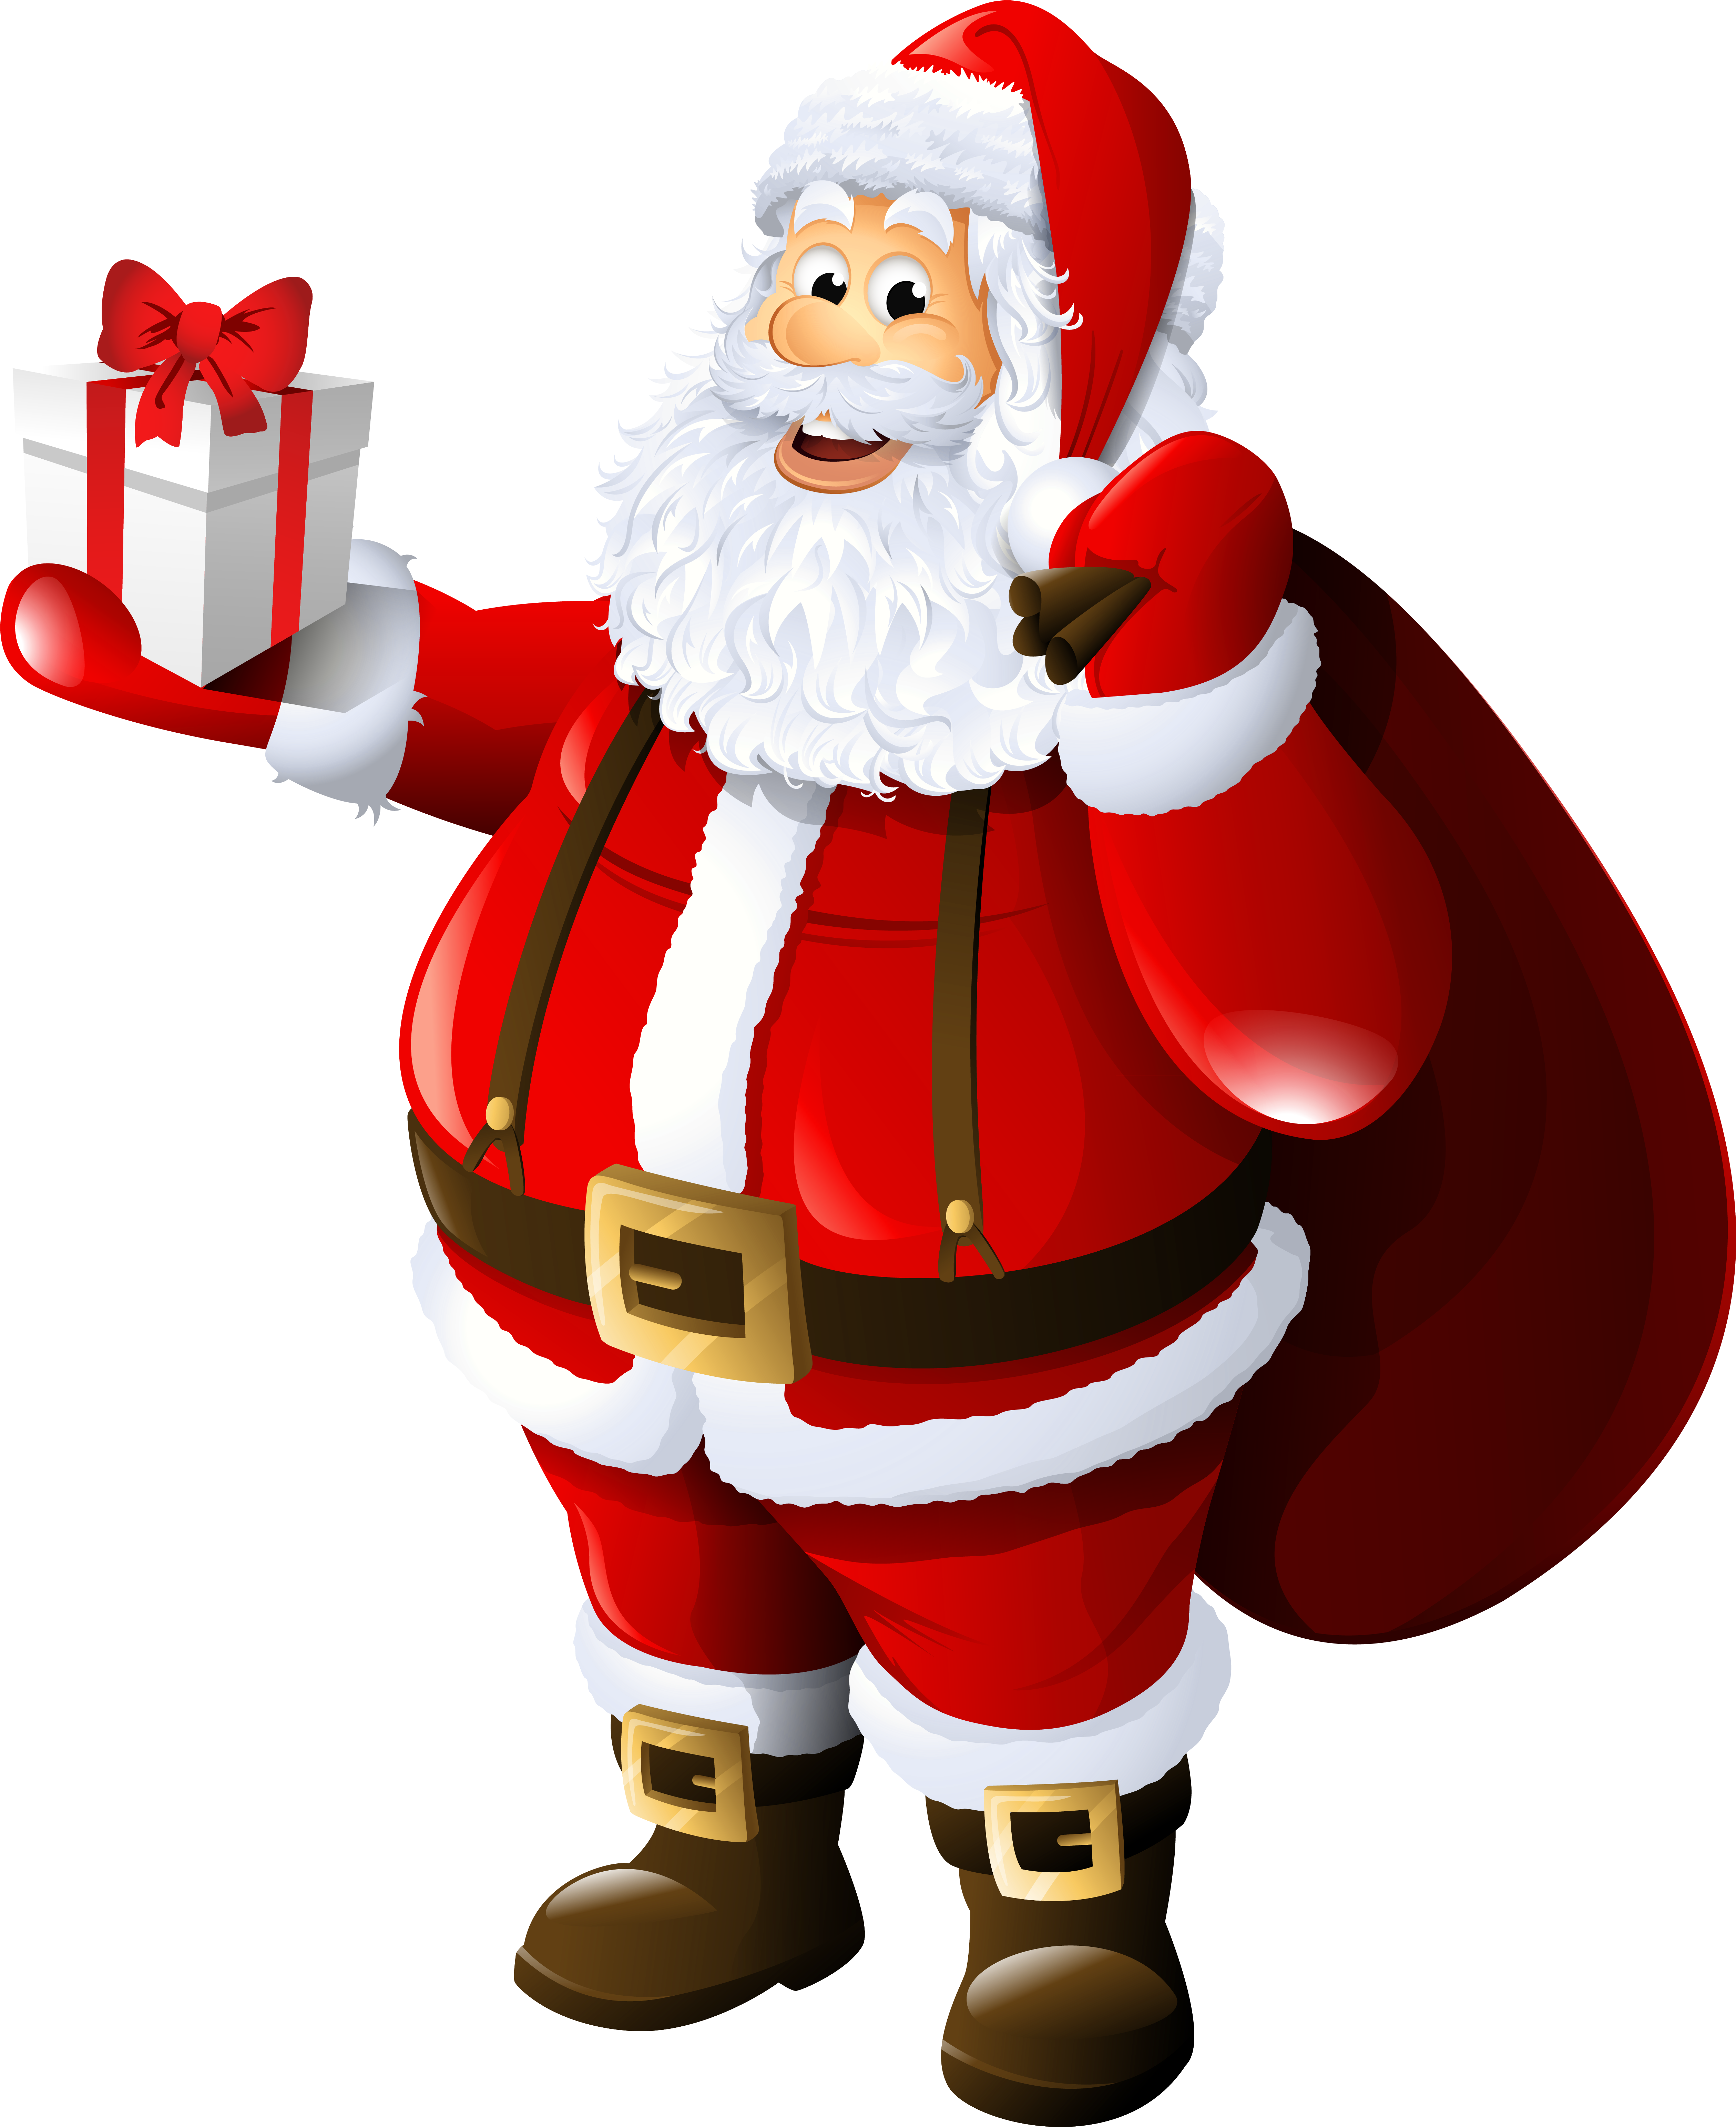 A Cartoon Of A Santa Claus Holding A Gift